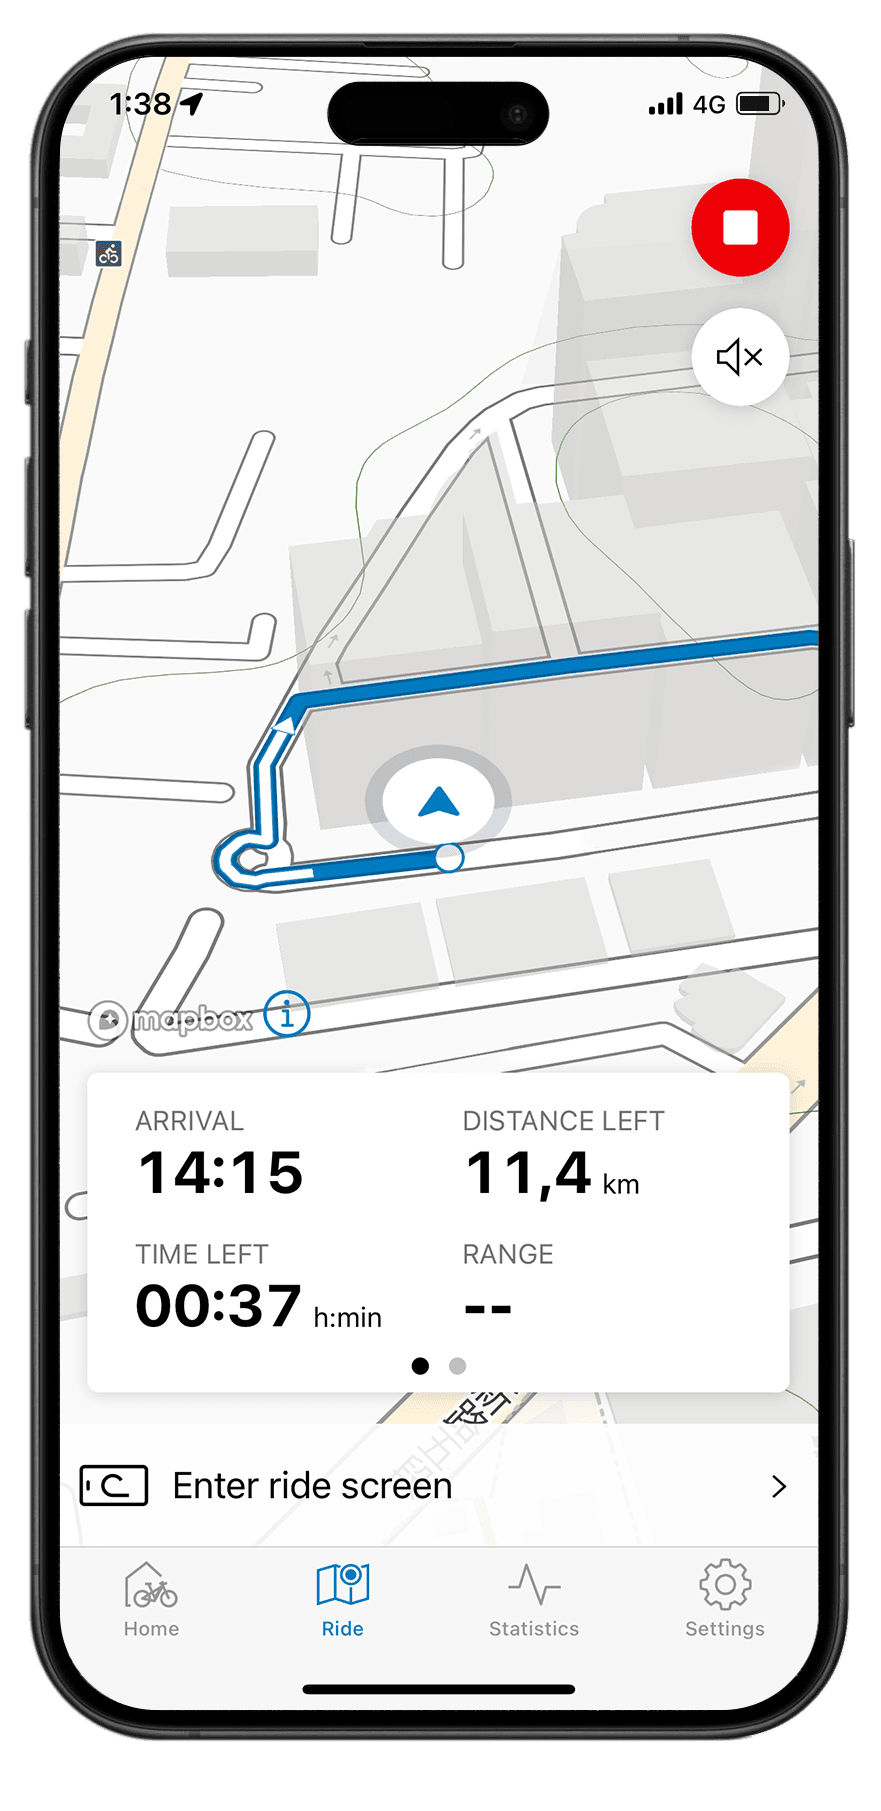 Navigation screen of Eflow app